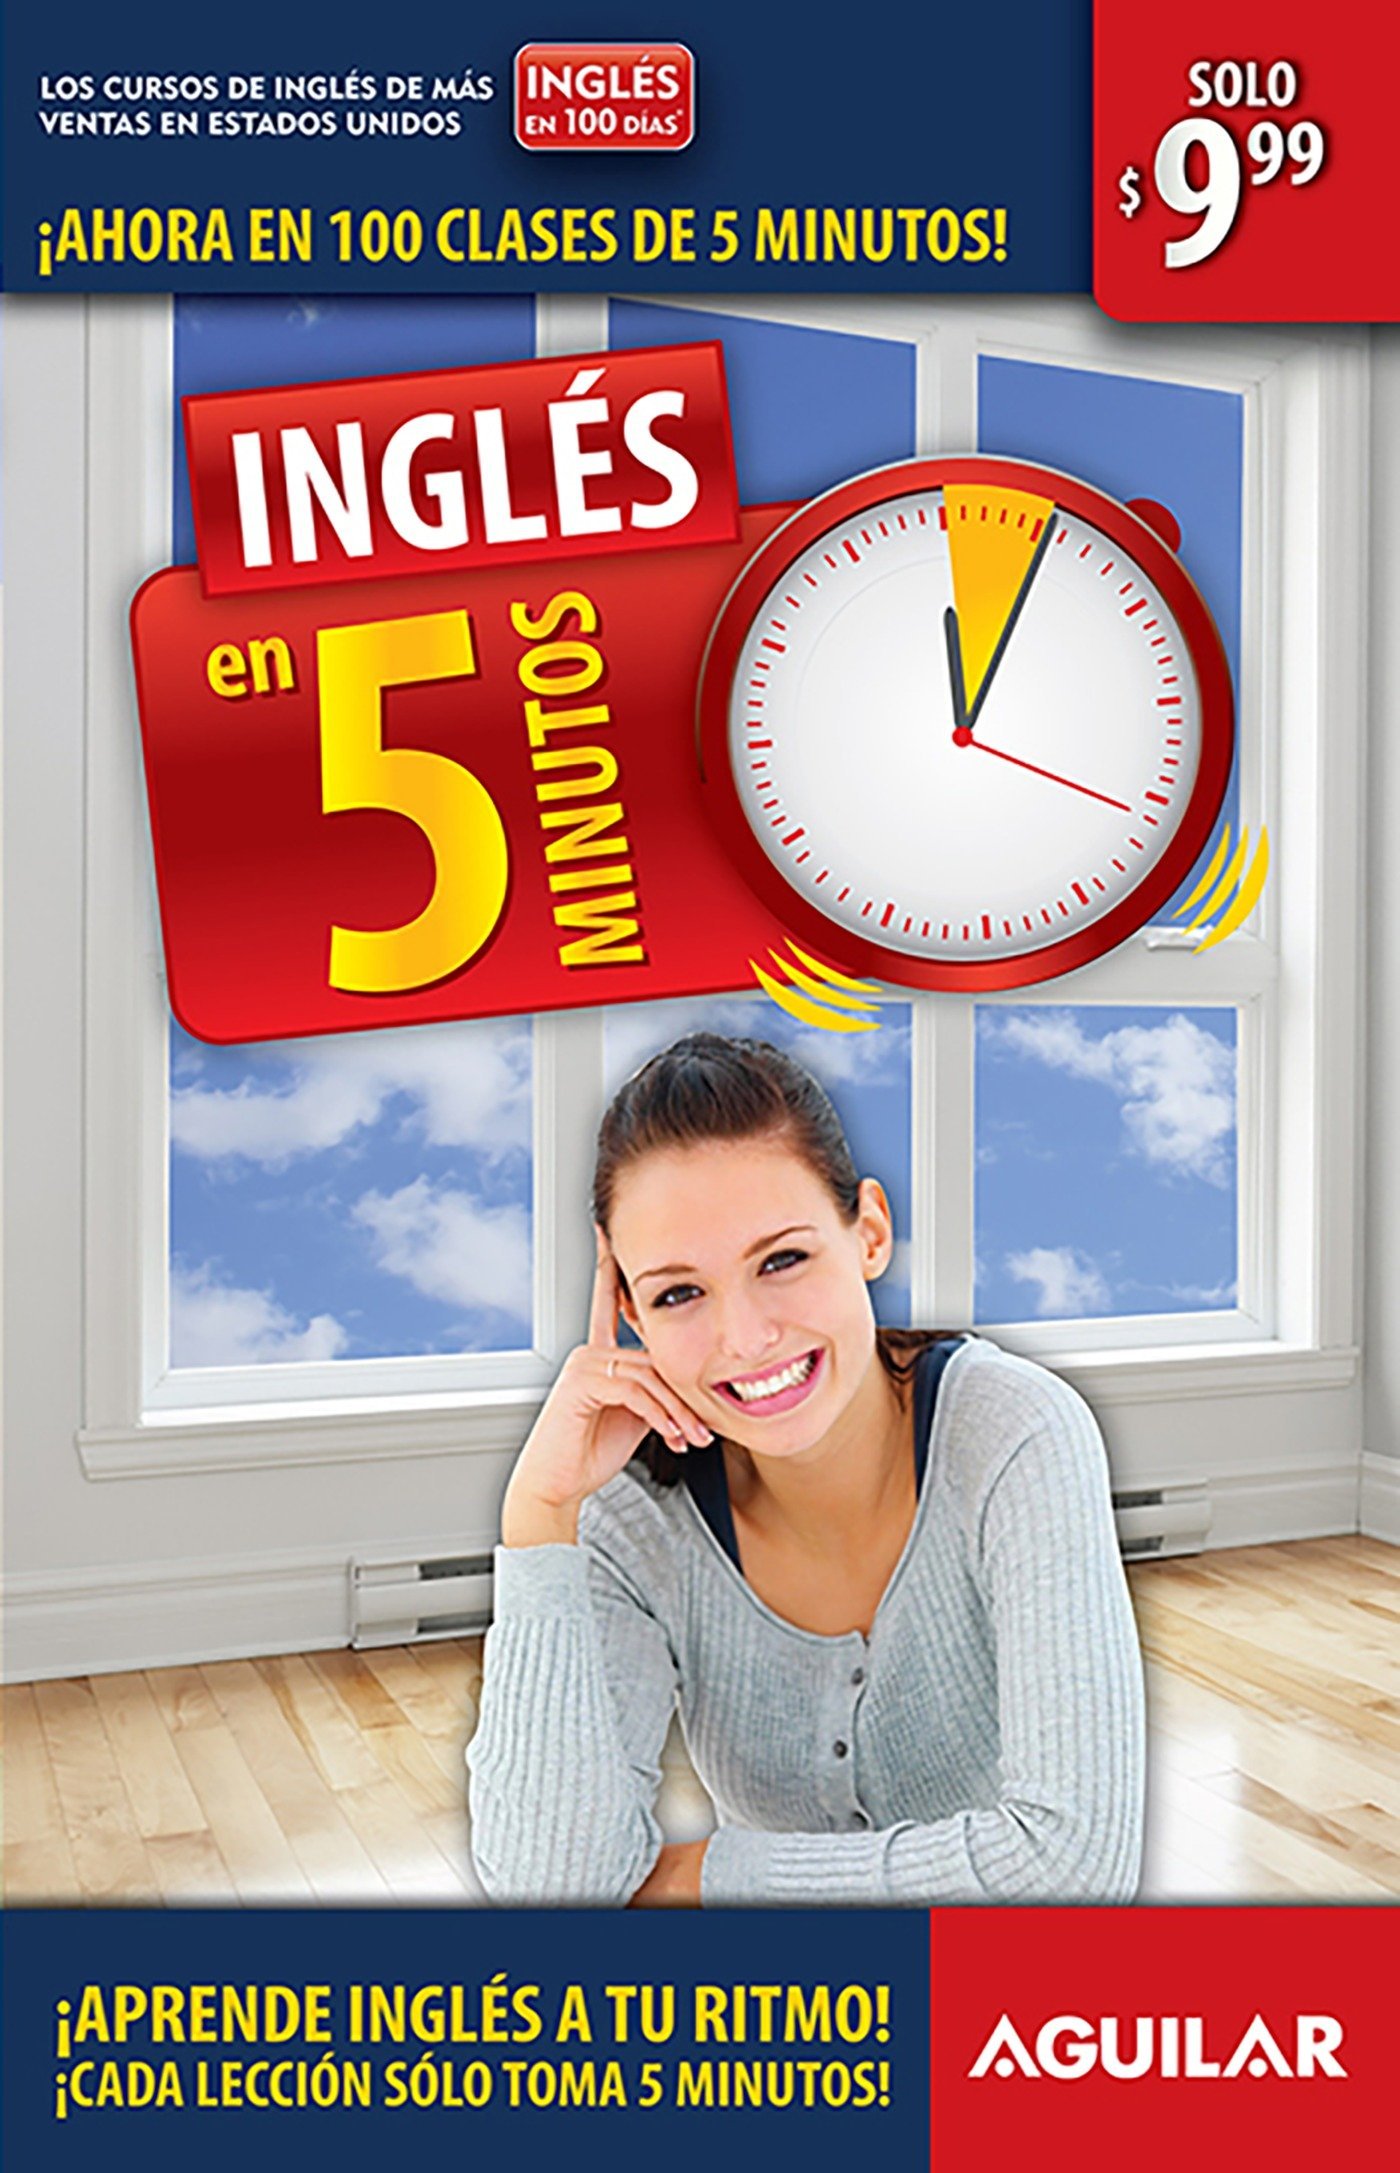 Inglés en 100 días - Inglés en 5 minutos / English in 100 Days - English in 5 Minutes (Spanish Edition)